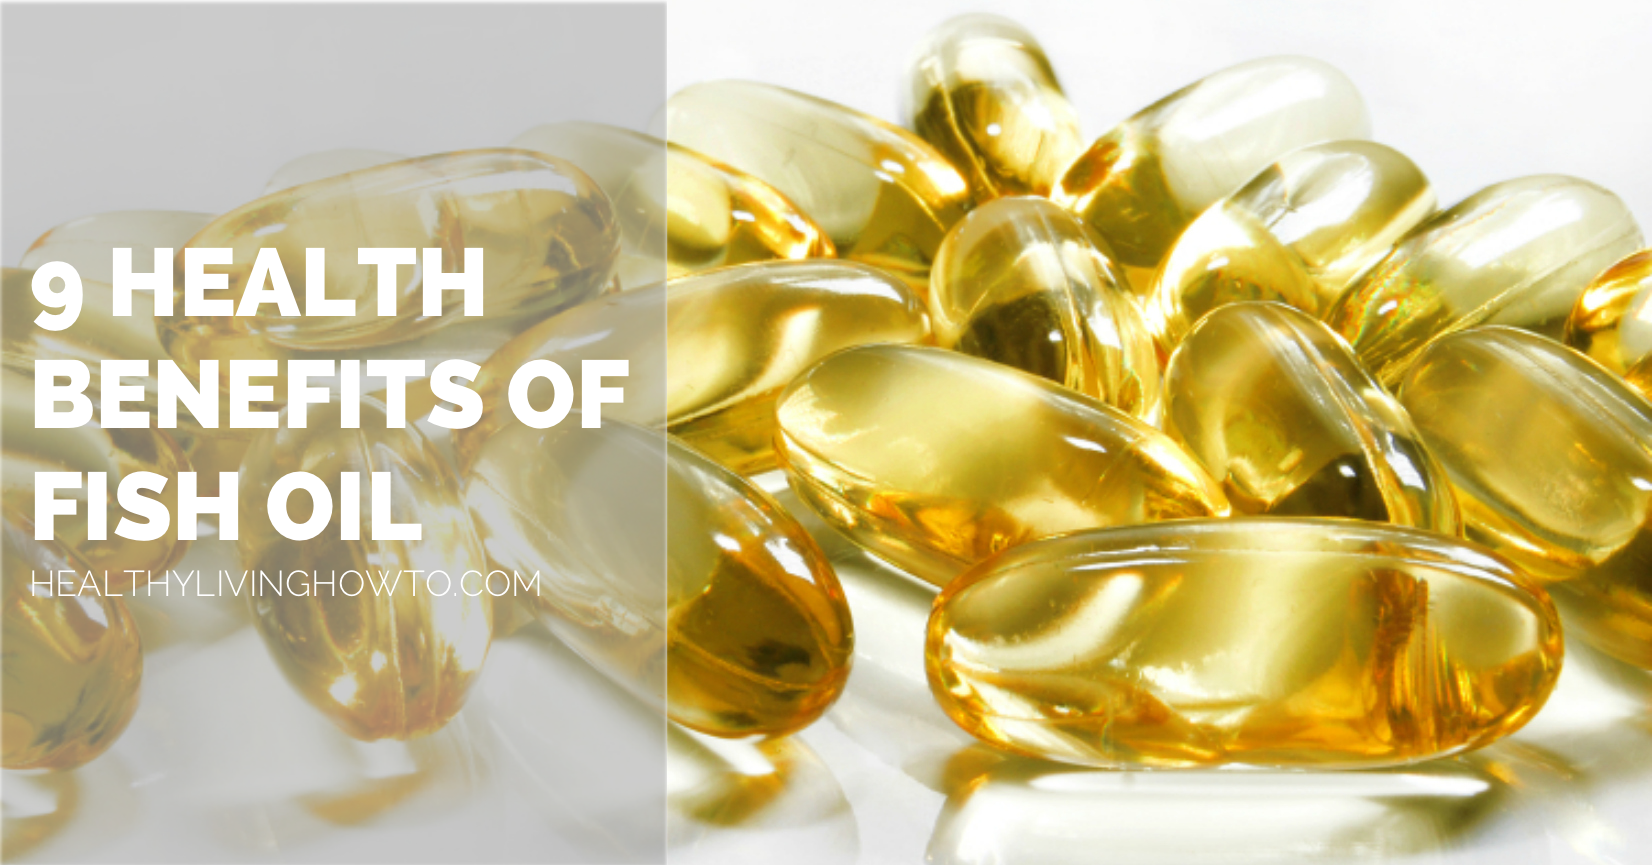 9 Health Benefits of Fish Oil